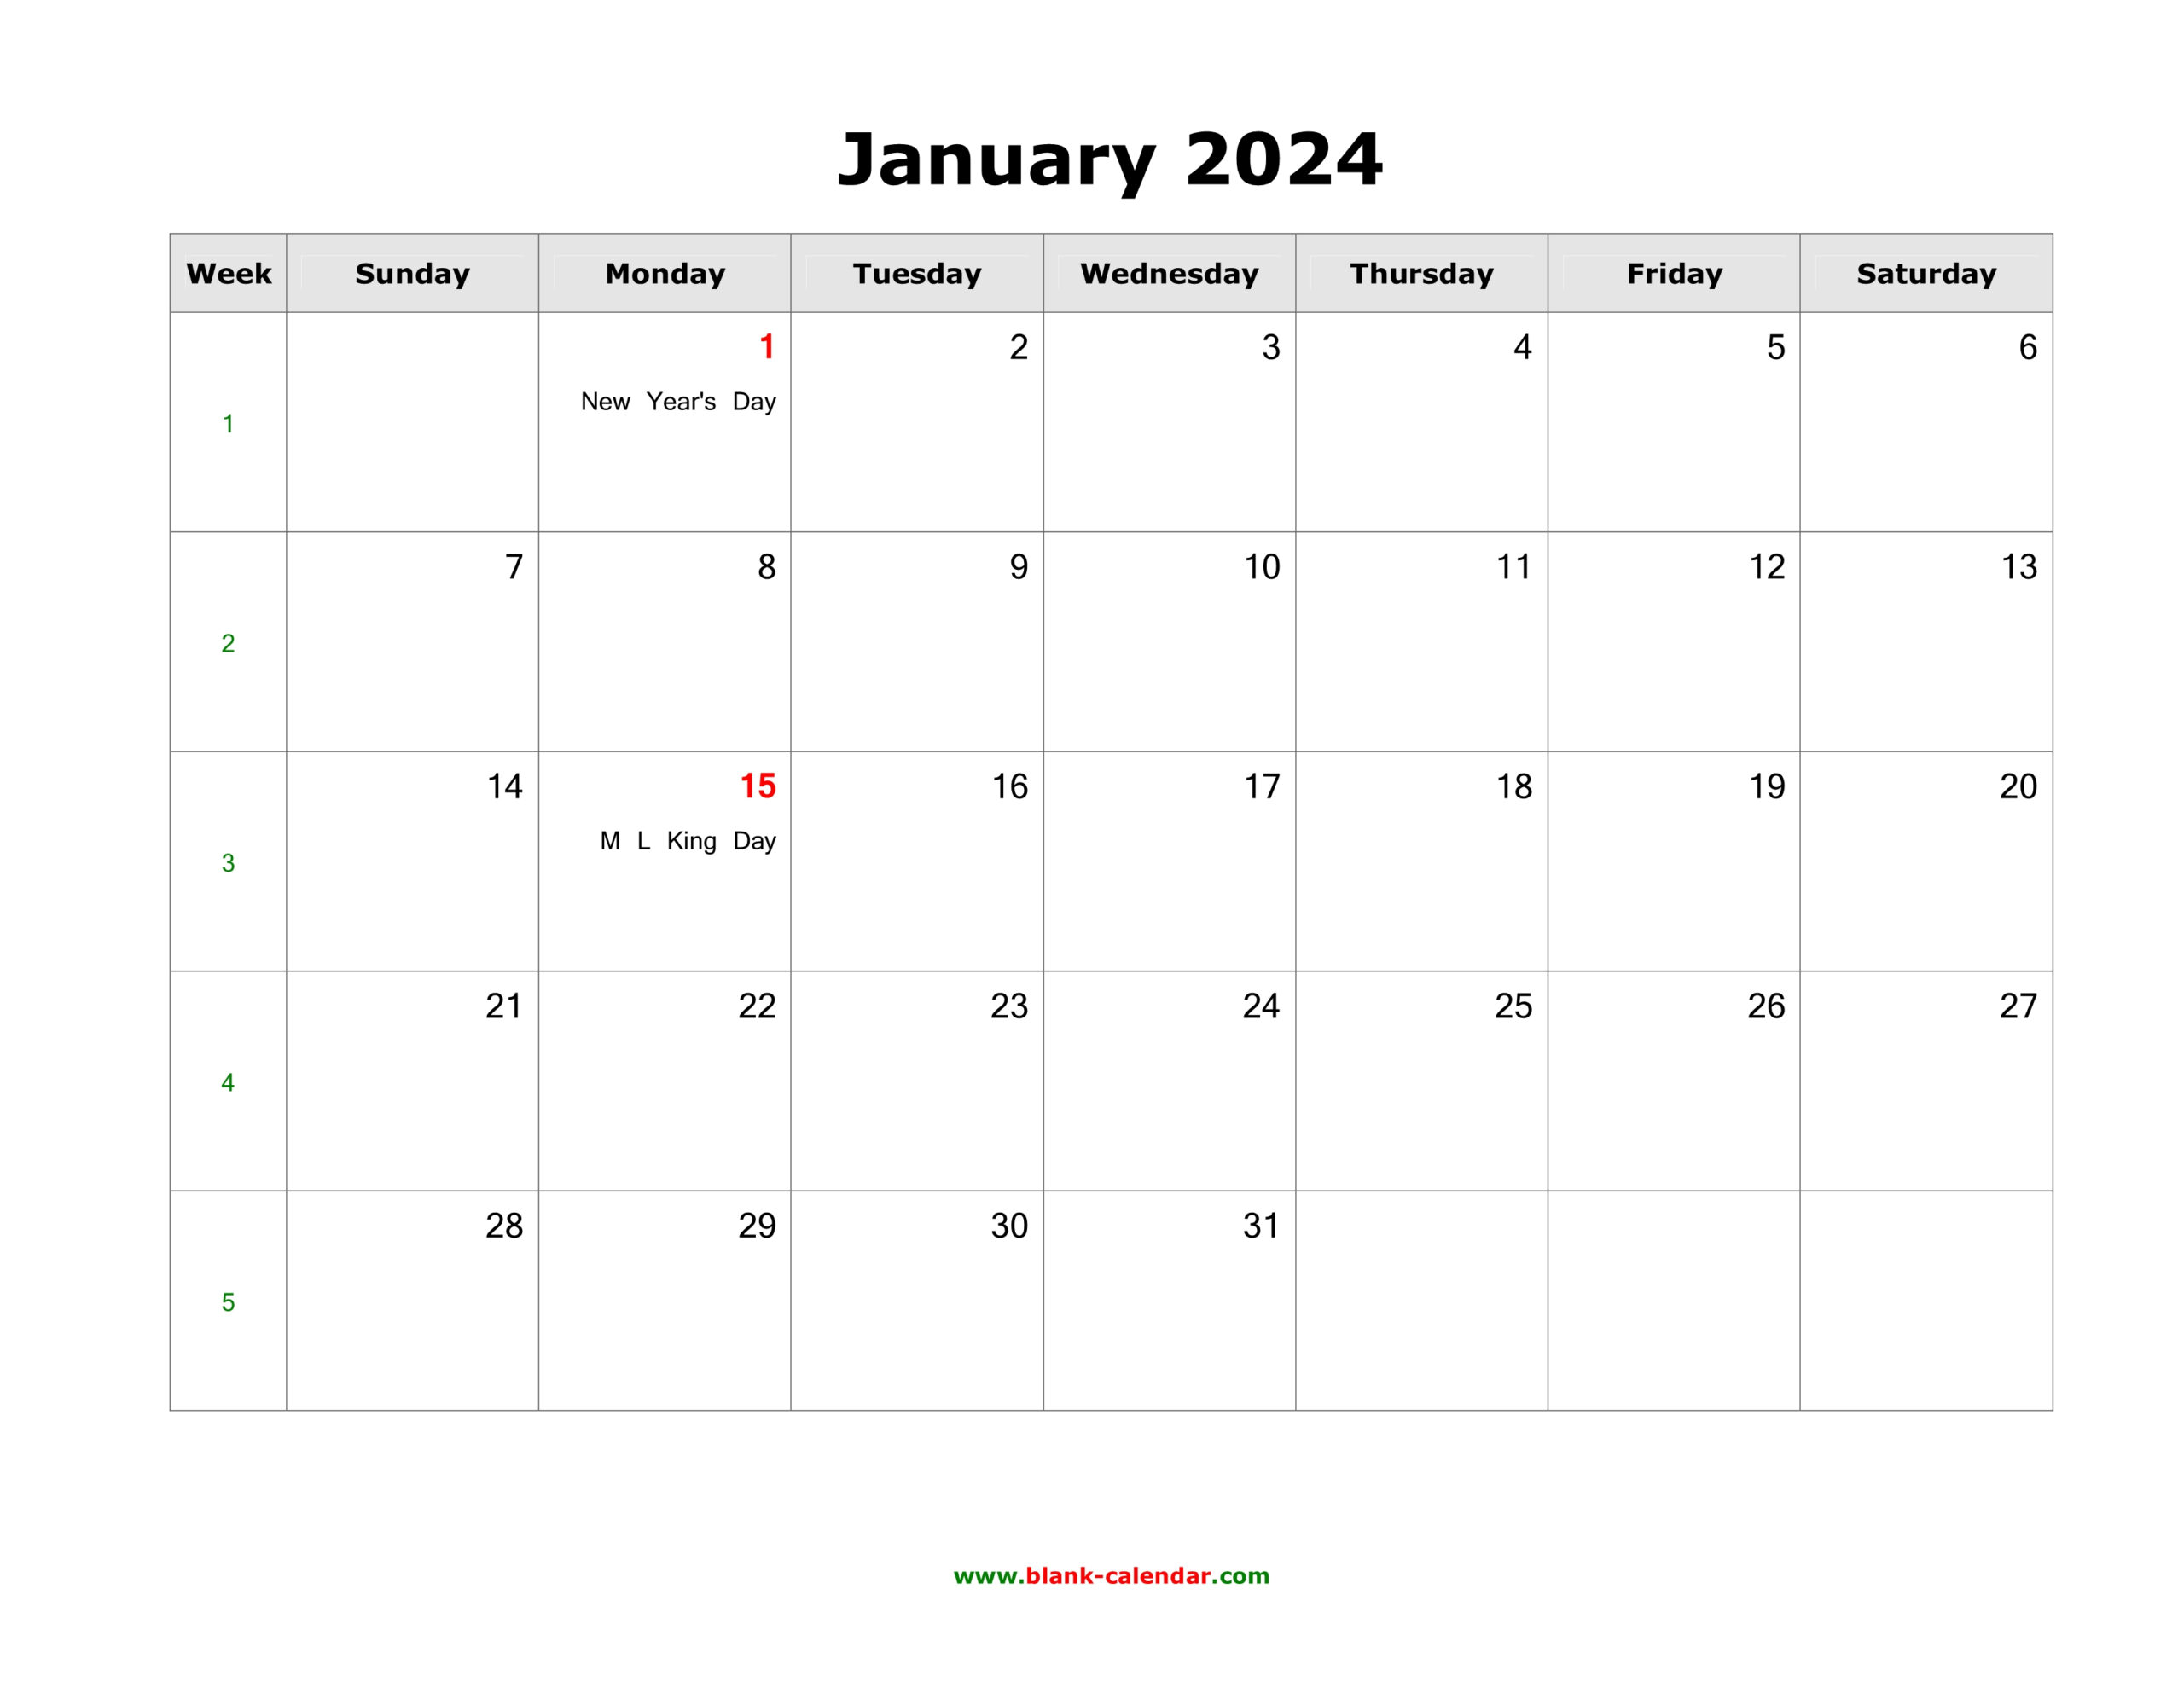 January 2024 Blank Calendar | Free Download Calendar Templates for January 2024 Printable Calendar Word